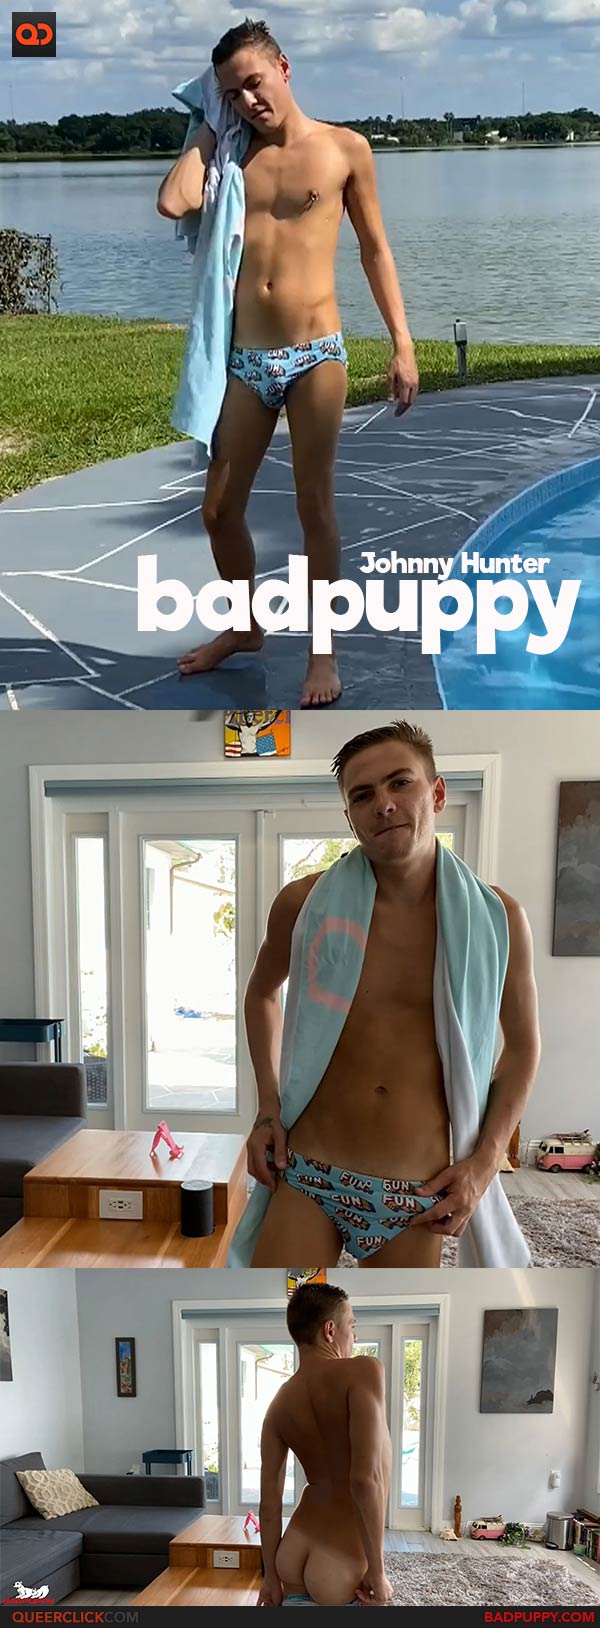 BadPuppy: Johnny Hunter